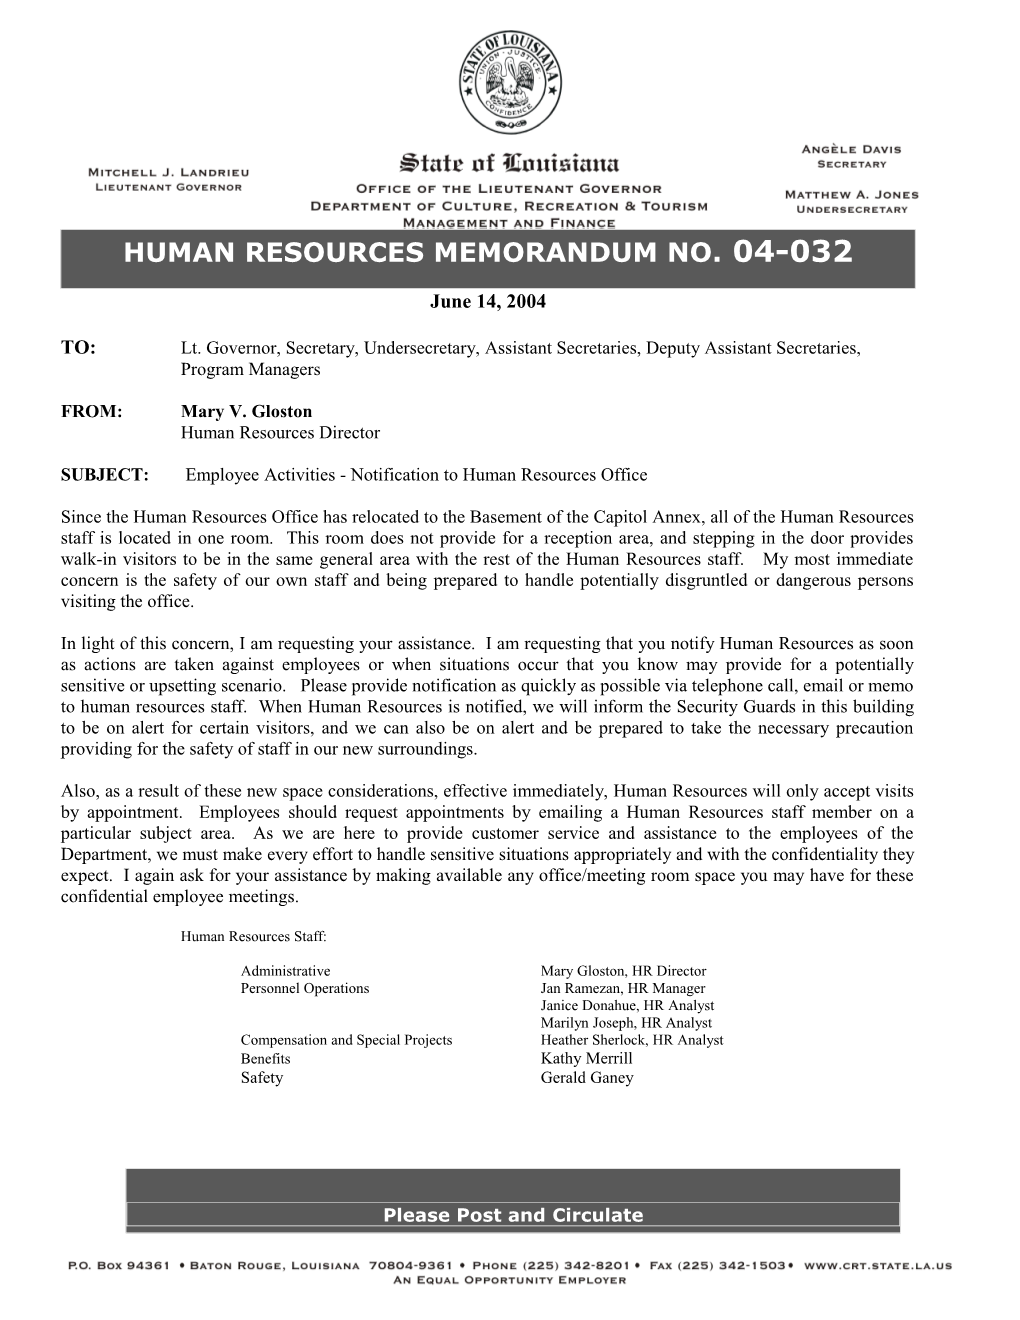 Human Resources Memorandum No s2